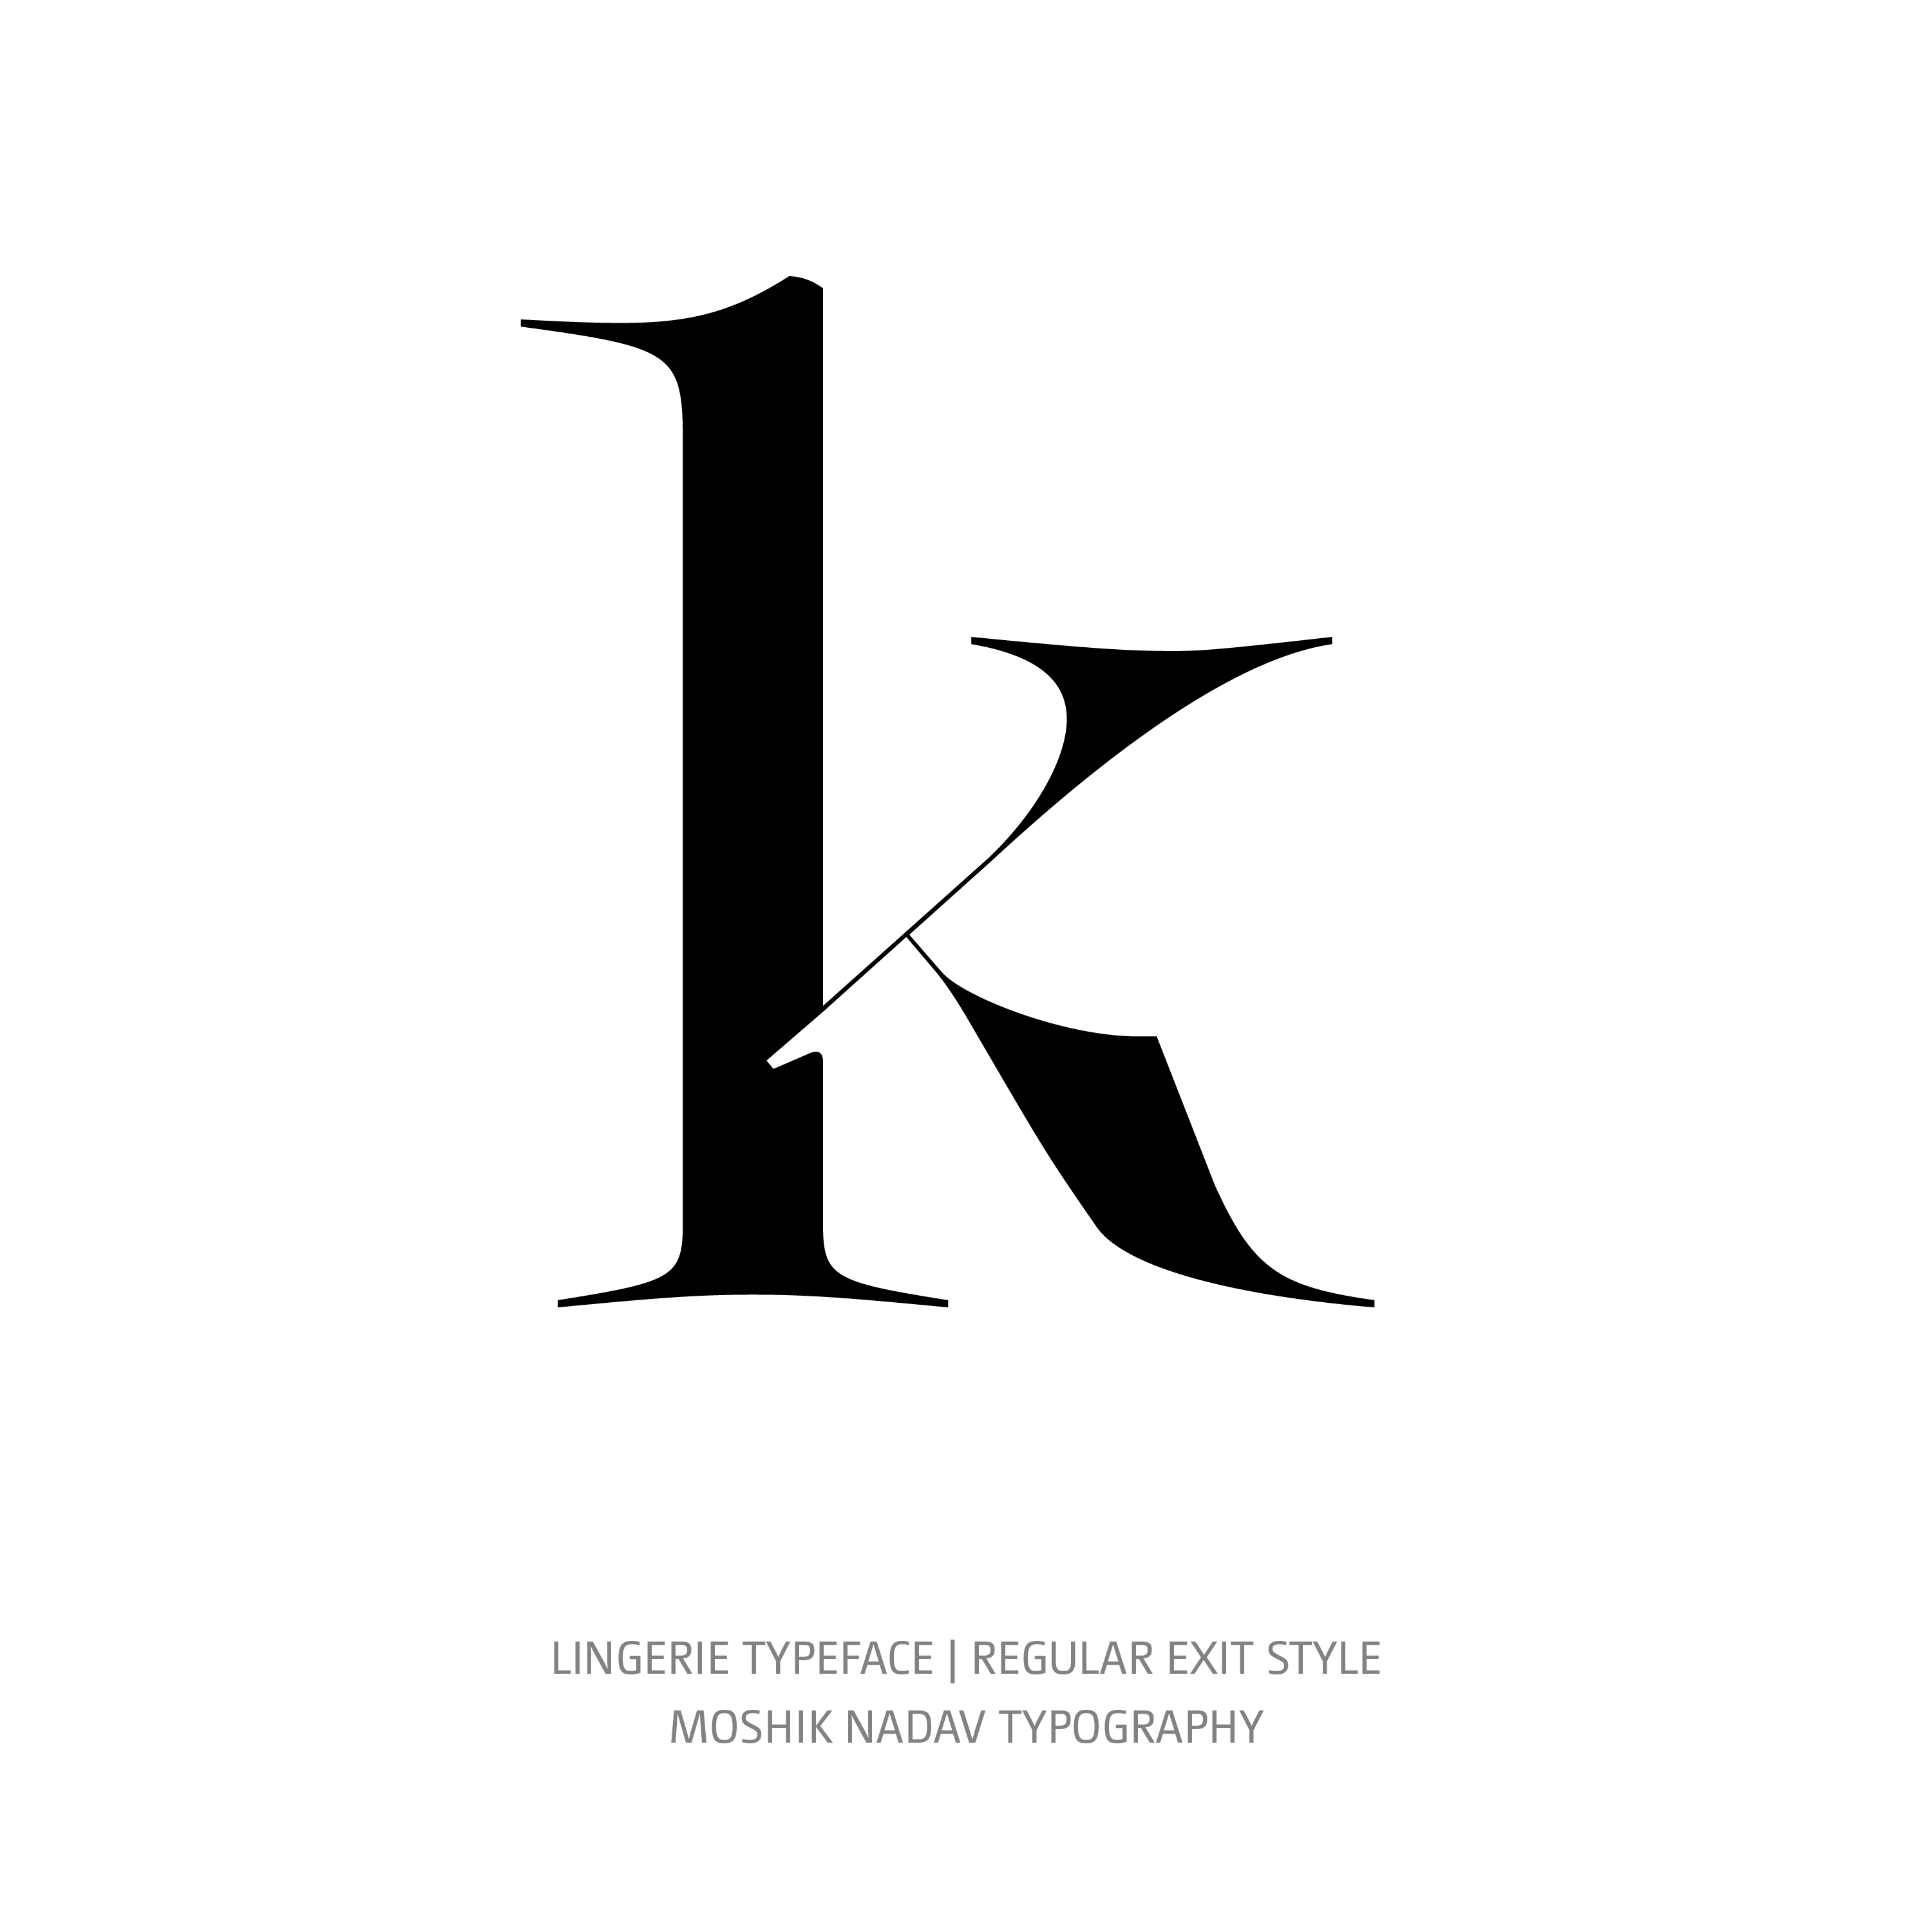 Lingerie Typeface Regular Exit k